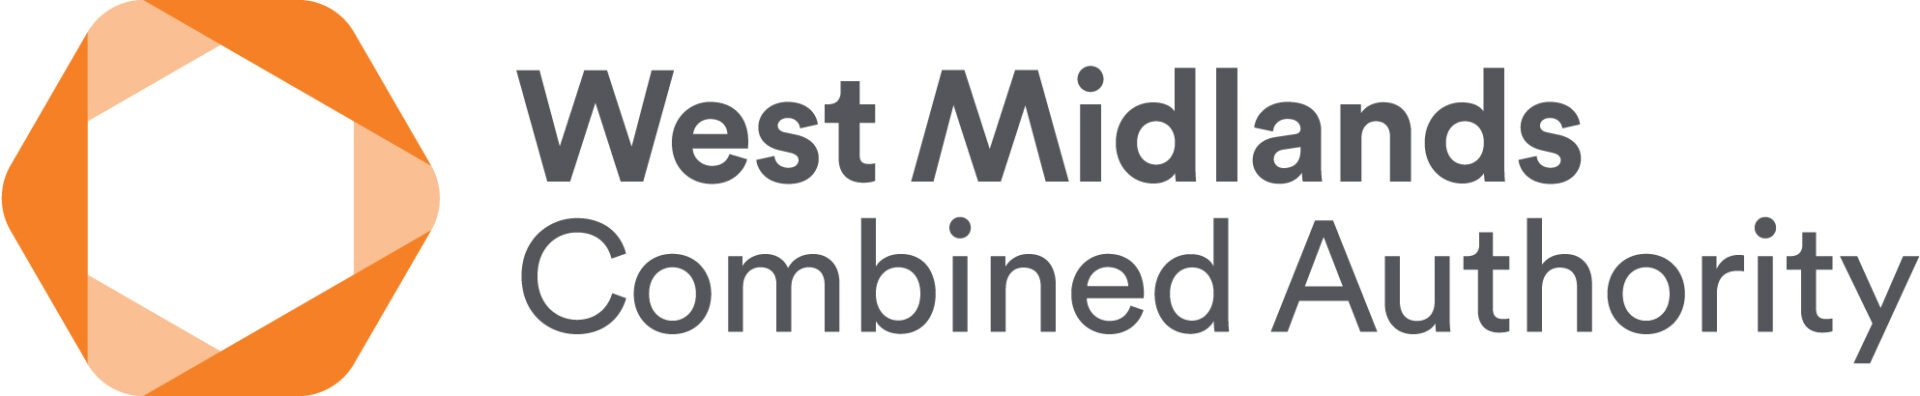 West Midlands Combined Authority logo.